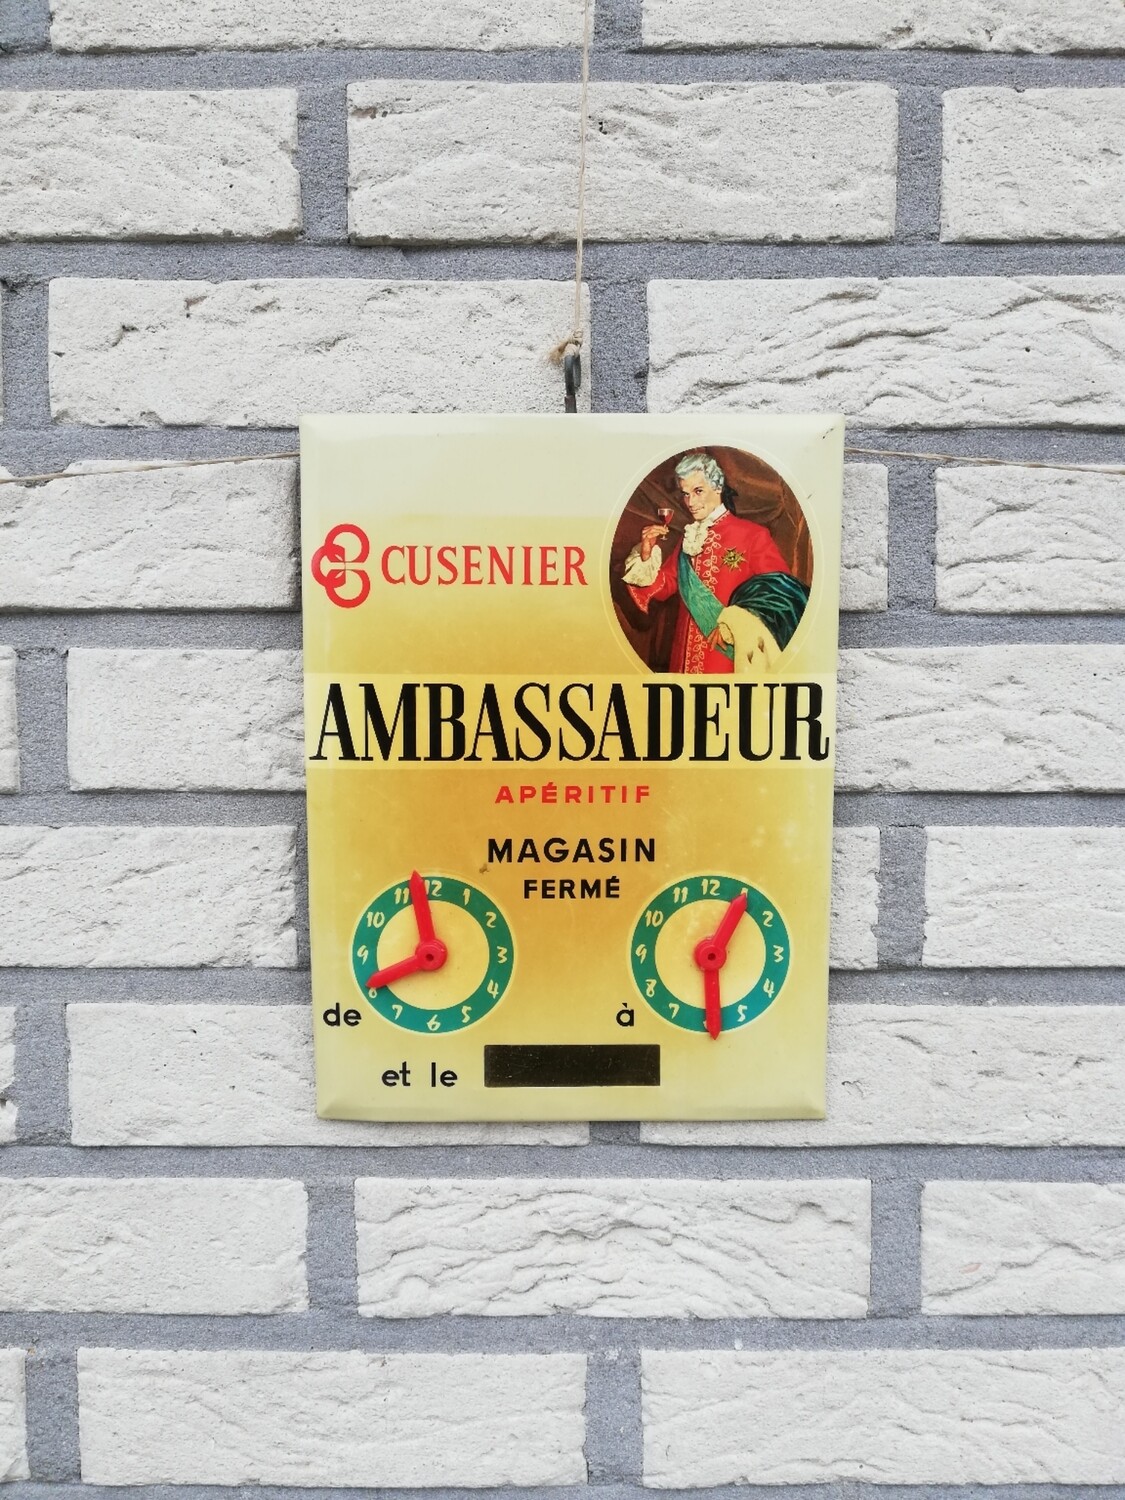 Reclamebordje Cusenier Ambassadeur